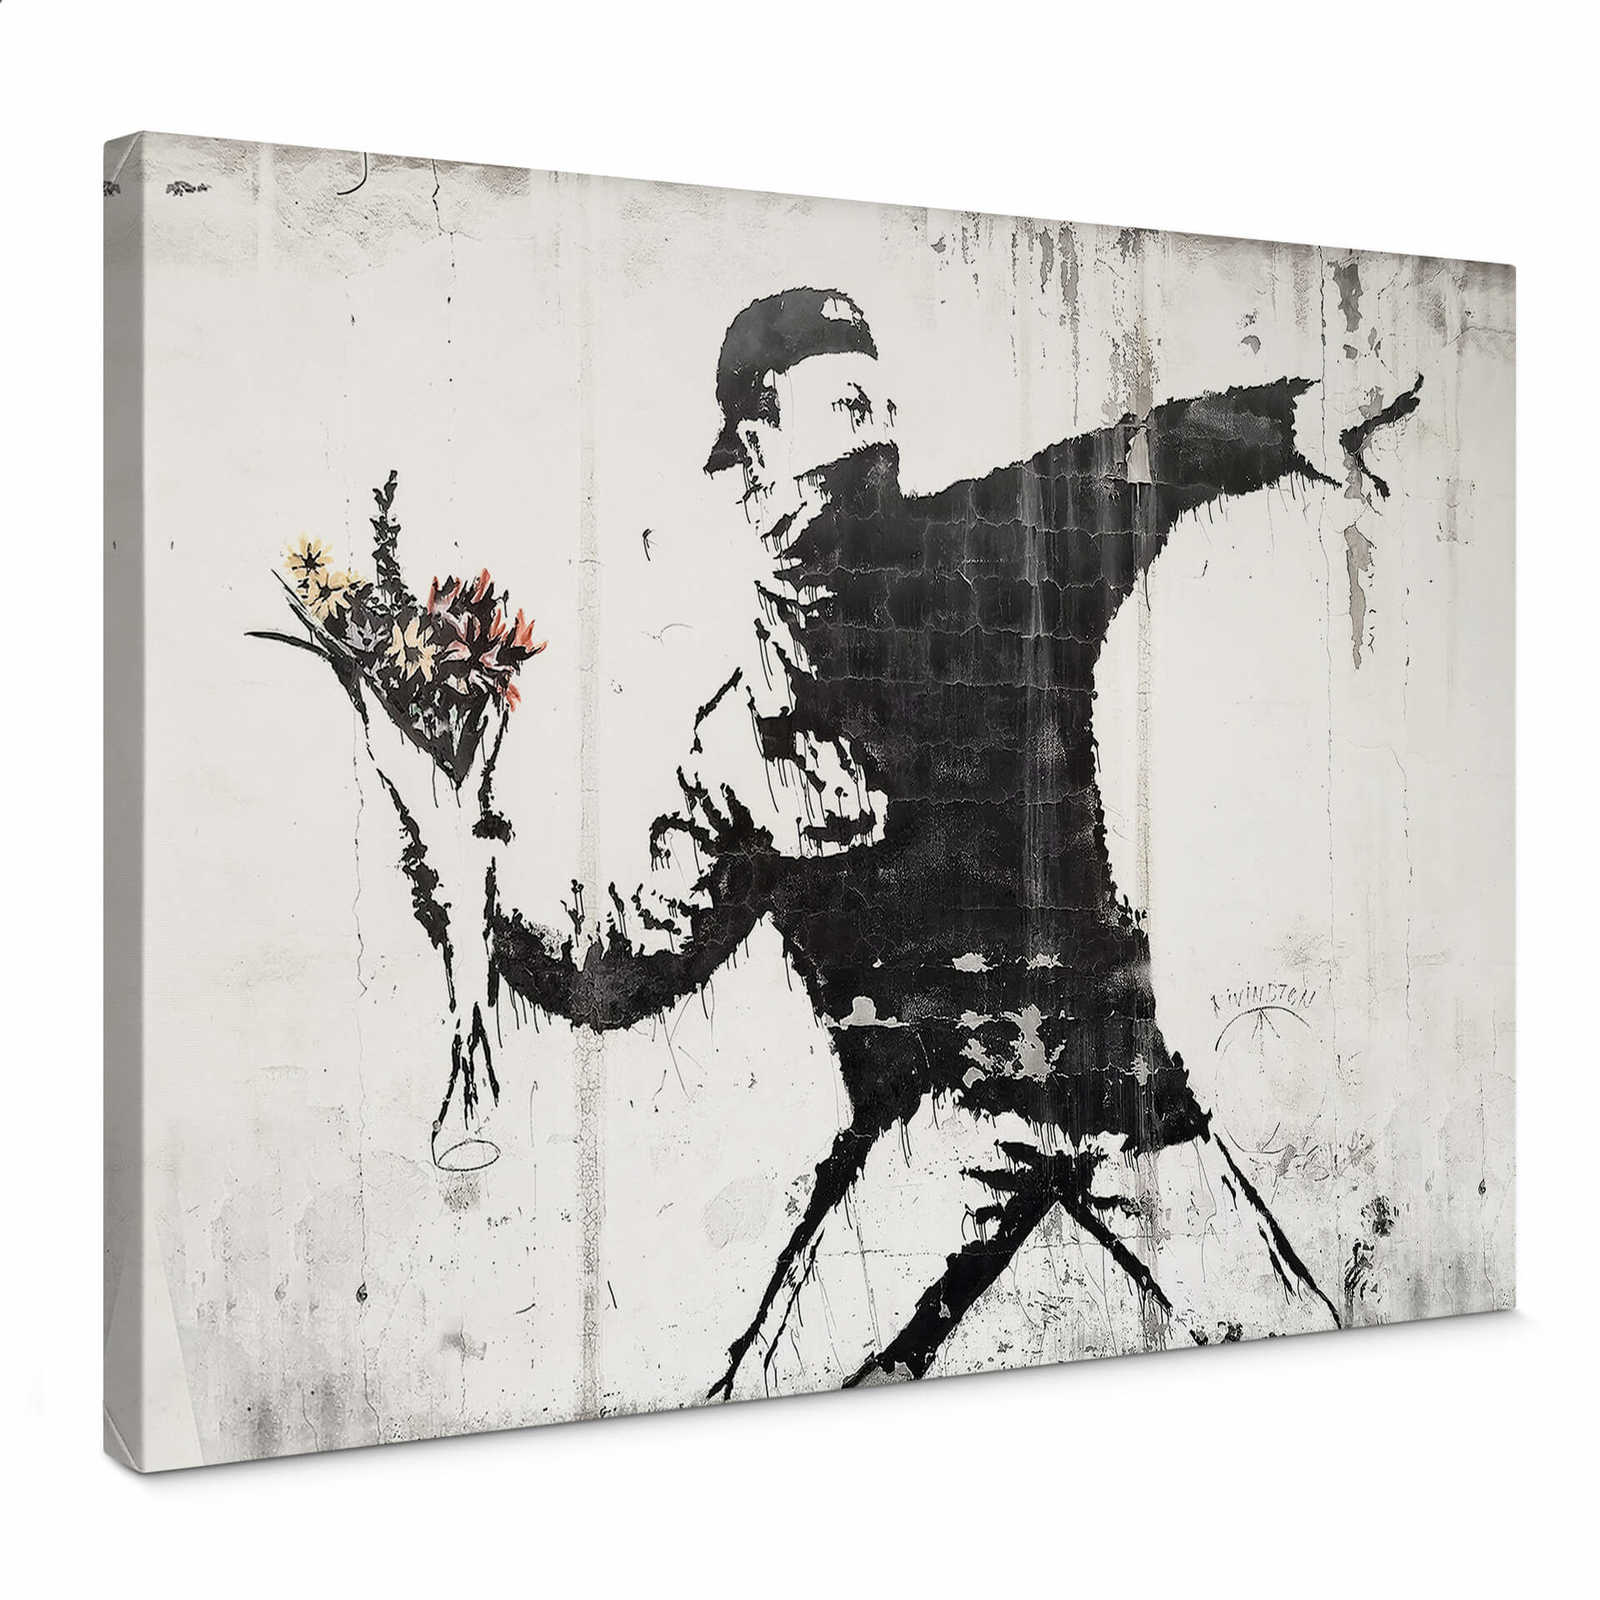         Banksy Canvas Schilderij "Bloemrijkwerper" Graffiti Stijl - 0.70 m x 0.50 m
    